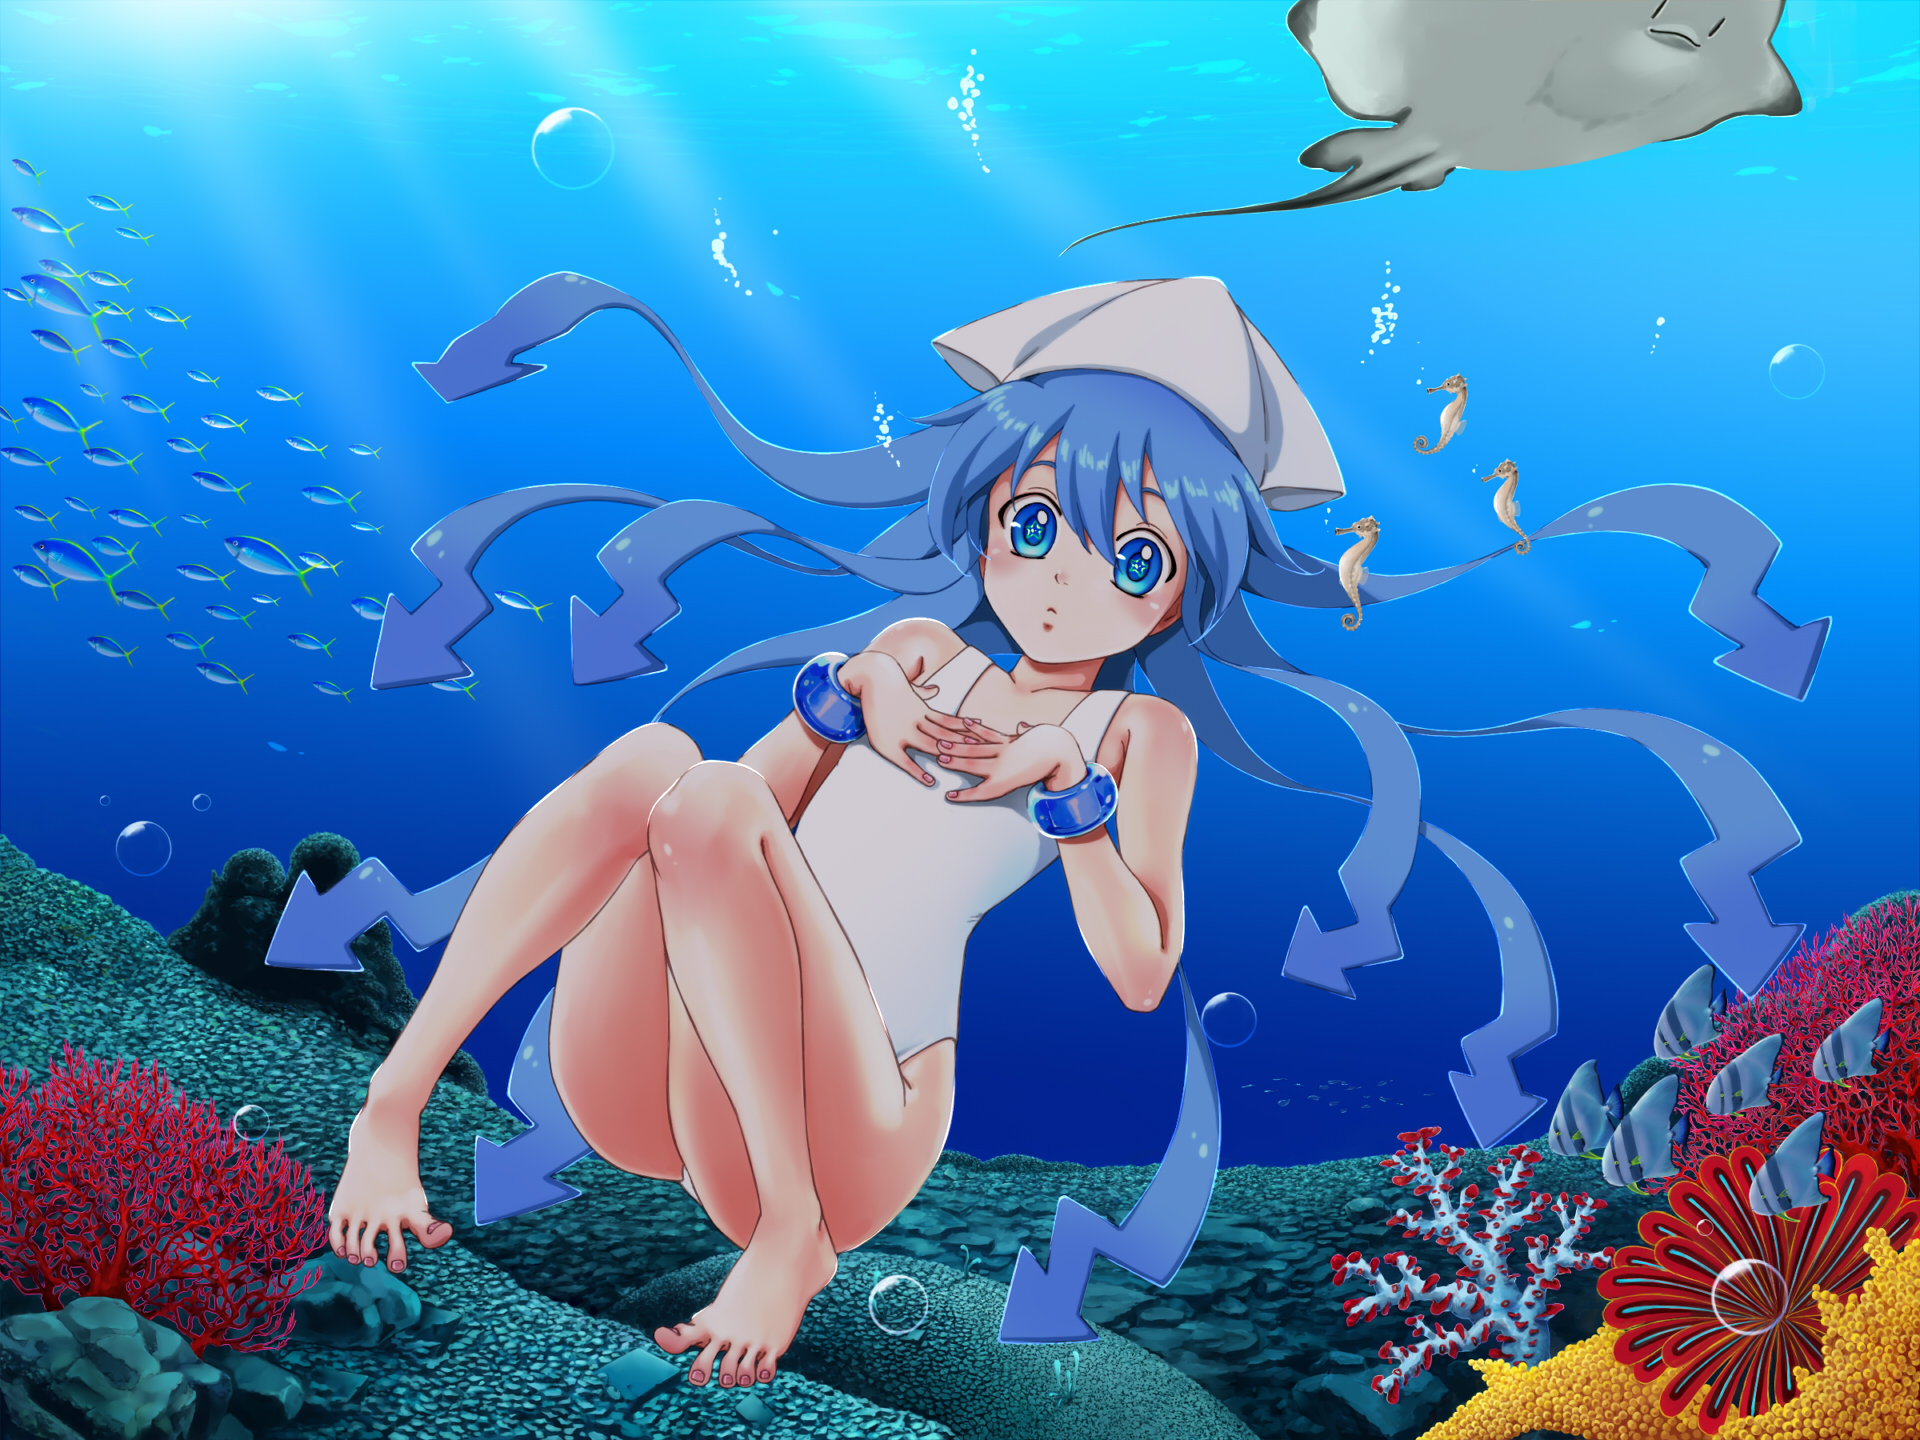 Anime 1920x1440 Shinryaku! Ika Musume anime girls Ika Musume anime blue hair blue eyes seahorses fish underwater knees together arrow (design) animals legs barefoot bracelets in water